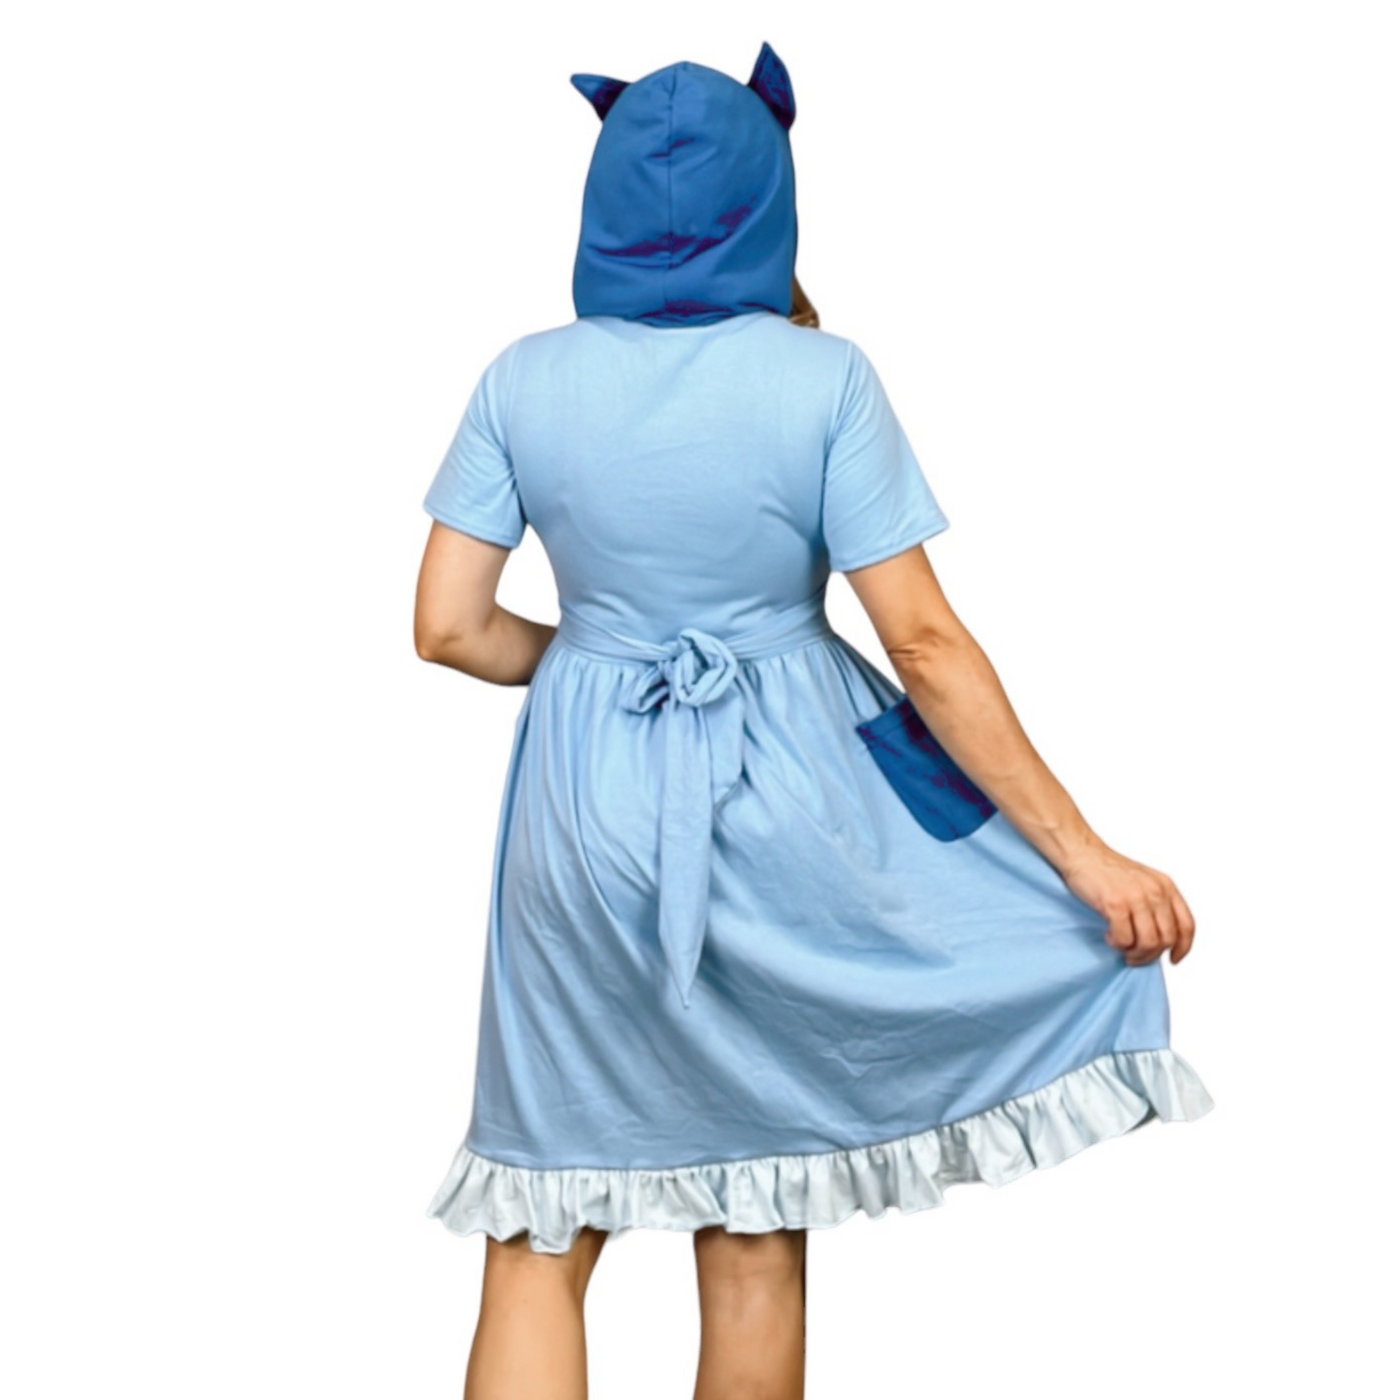 Blue dog adult dress